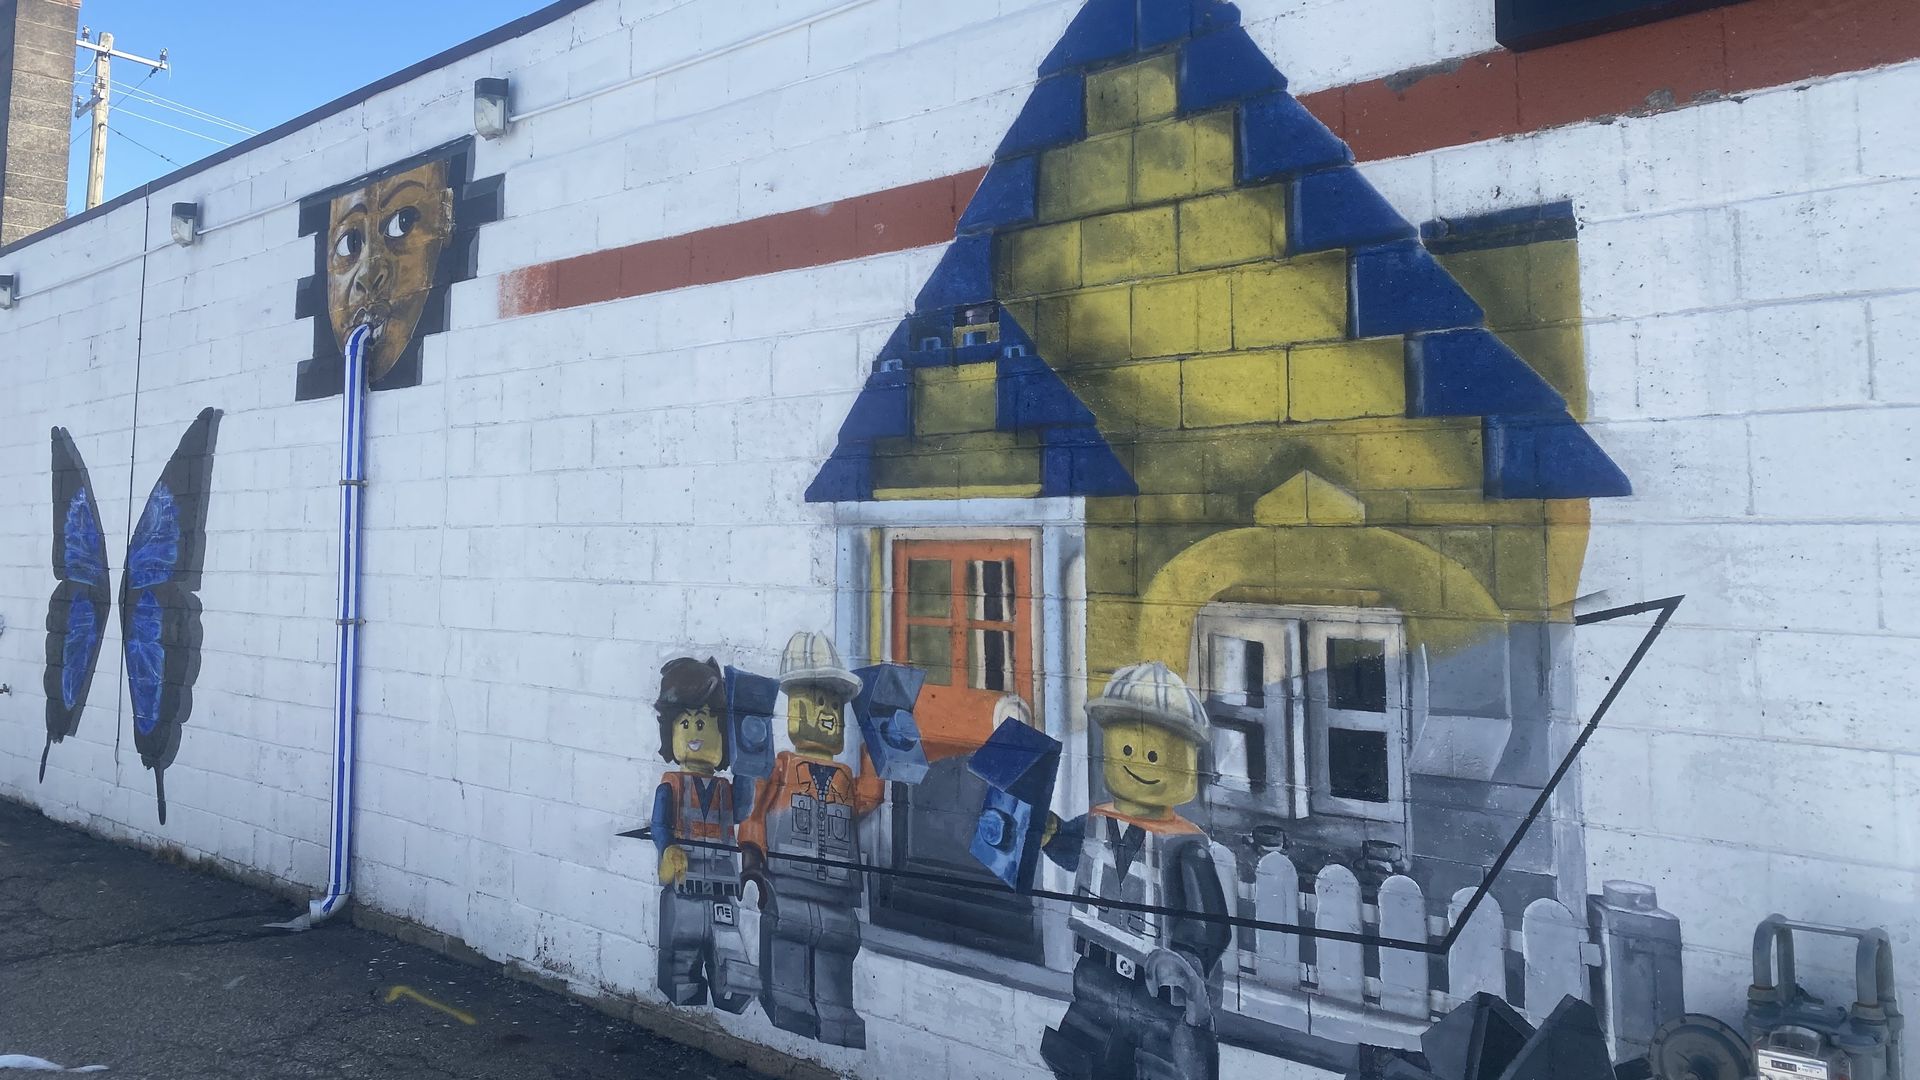 Lego mural